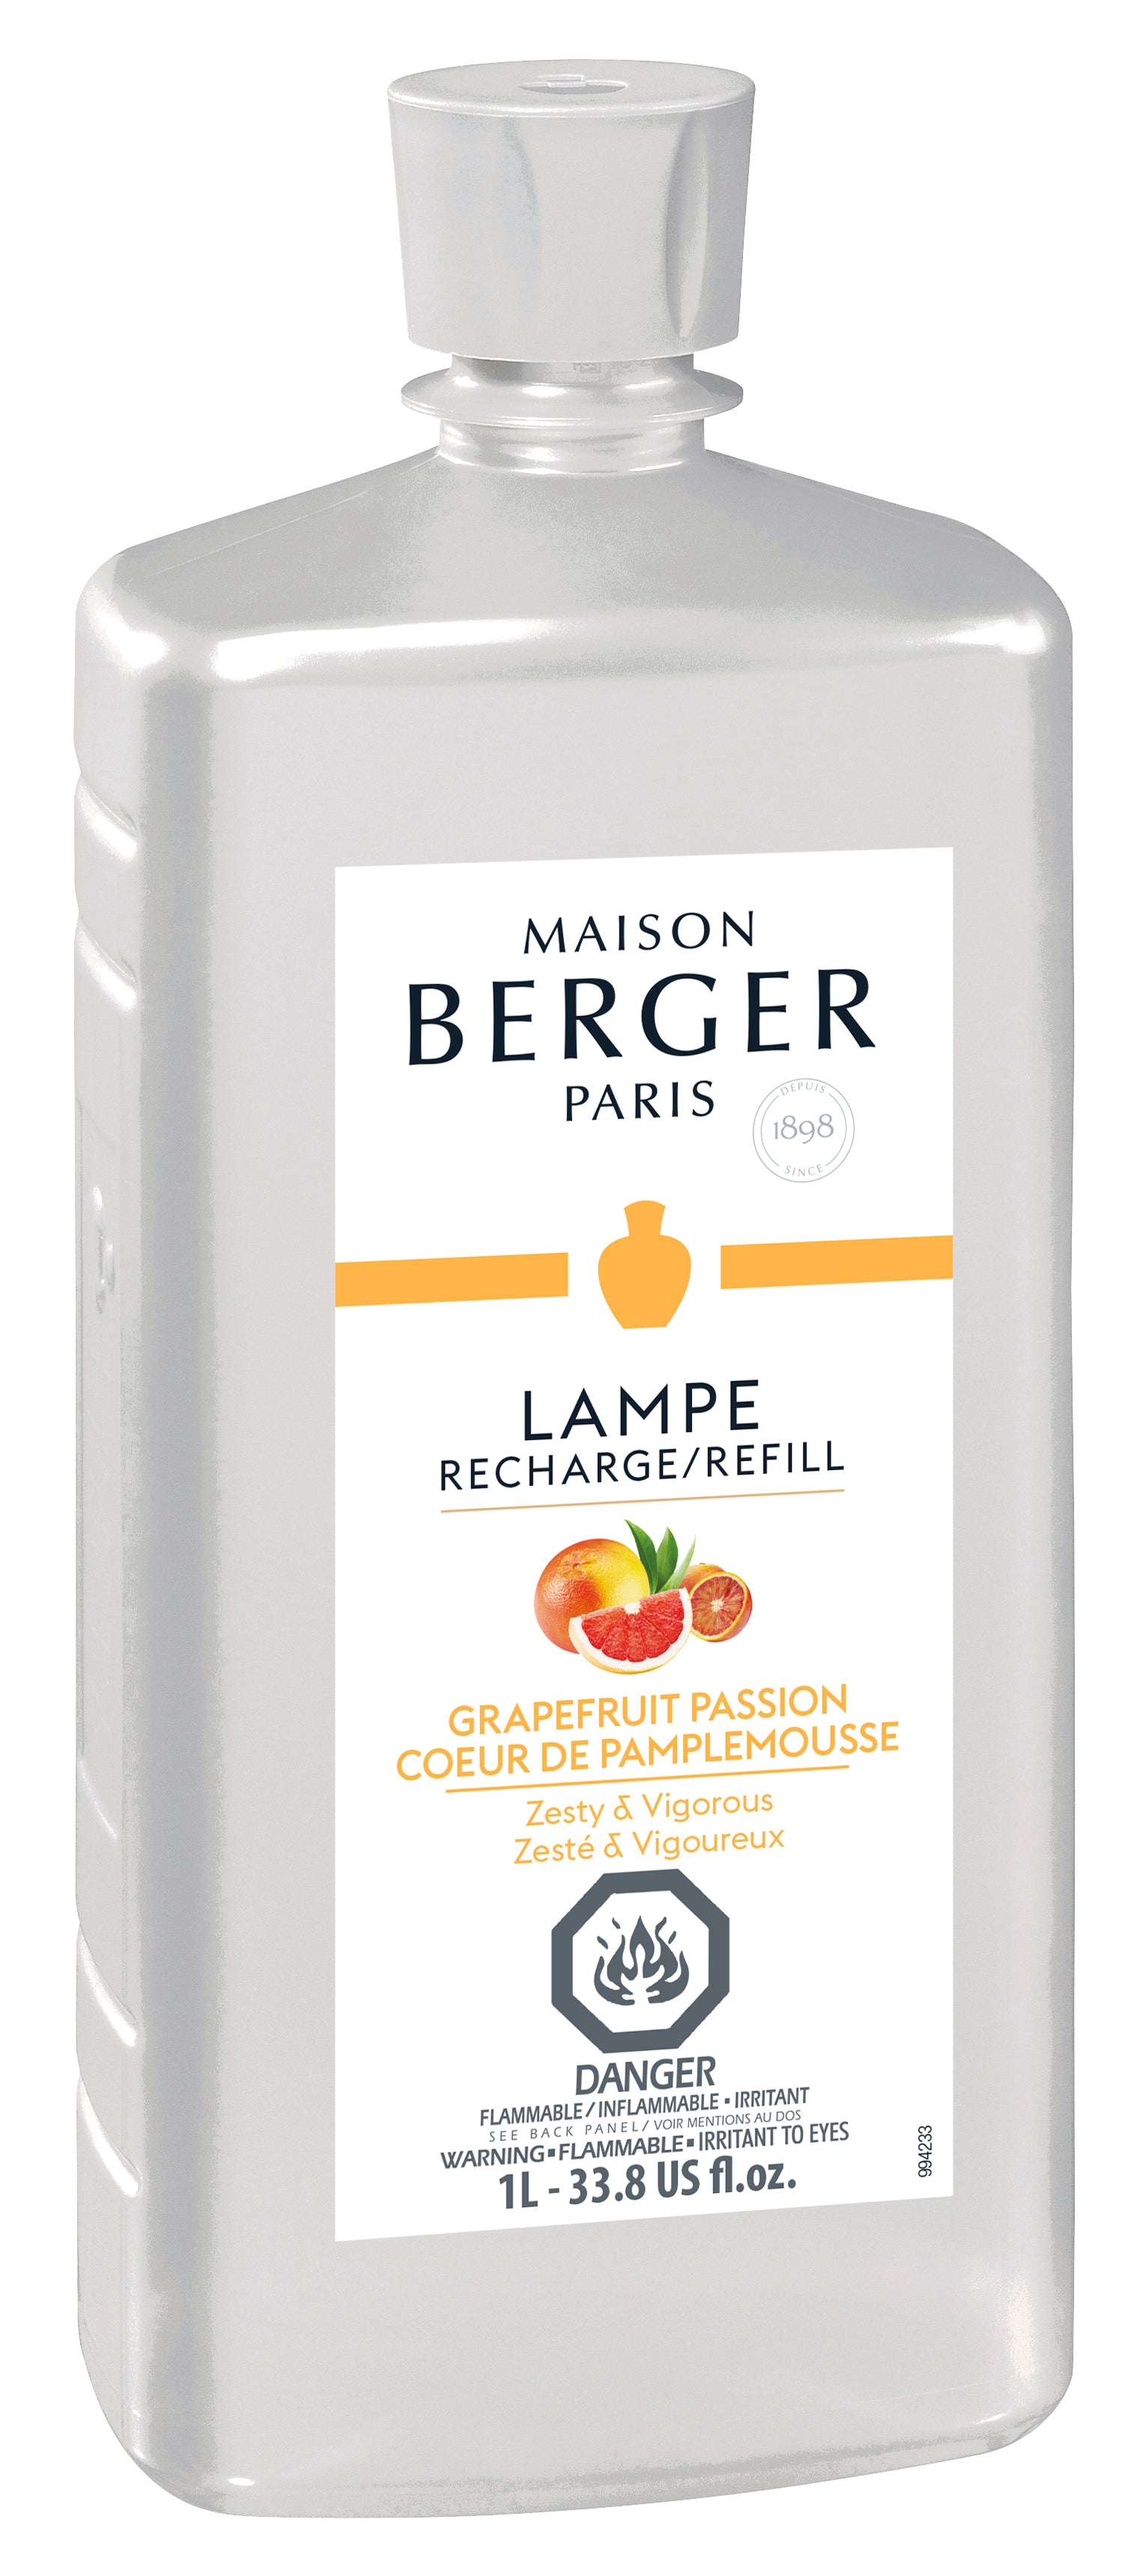 Lampe Berger Refill Grapefruit Passion